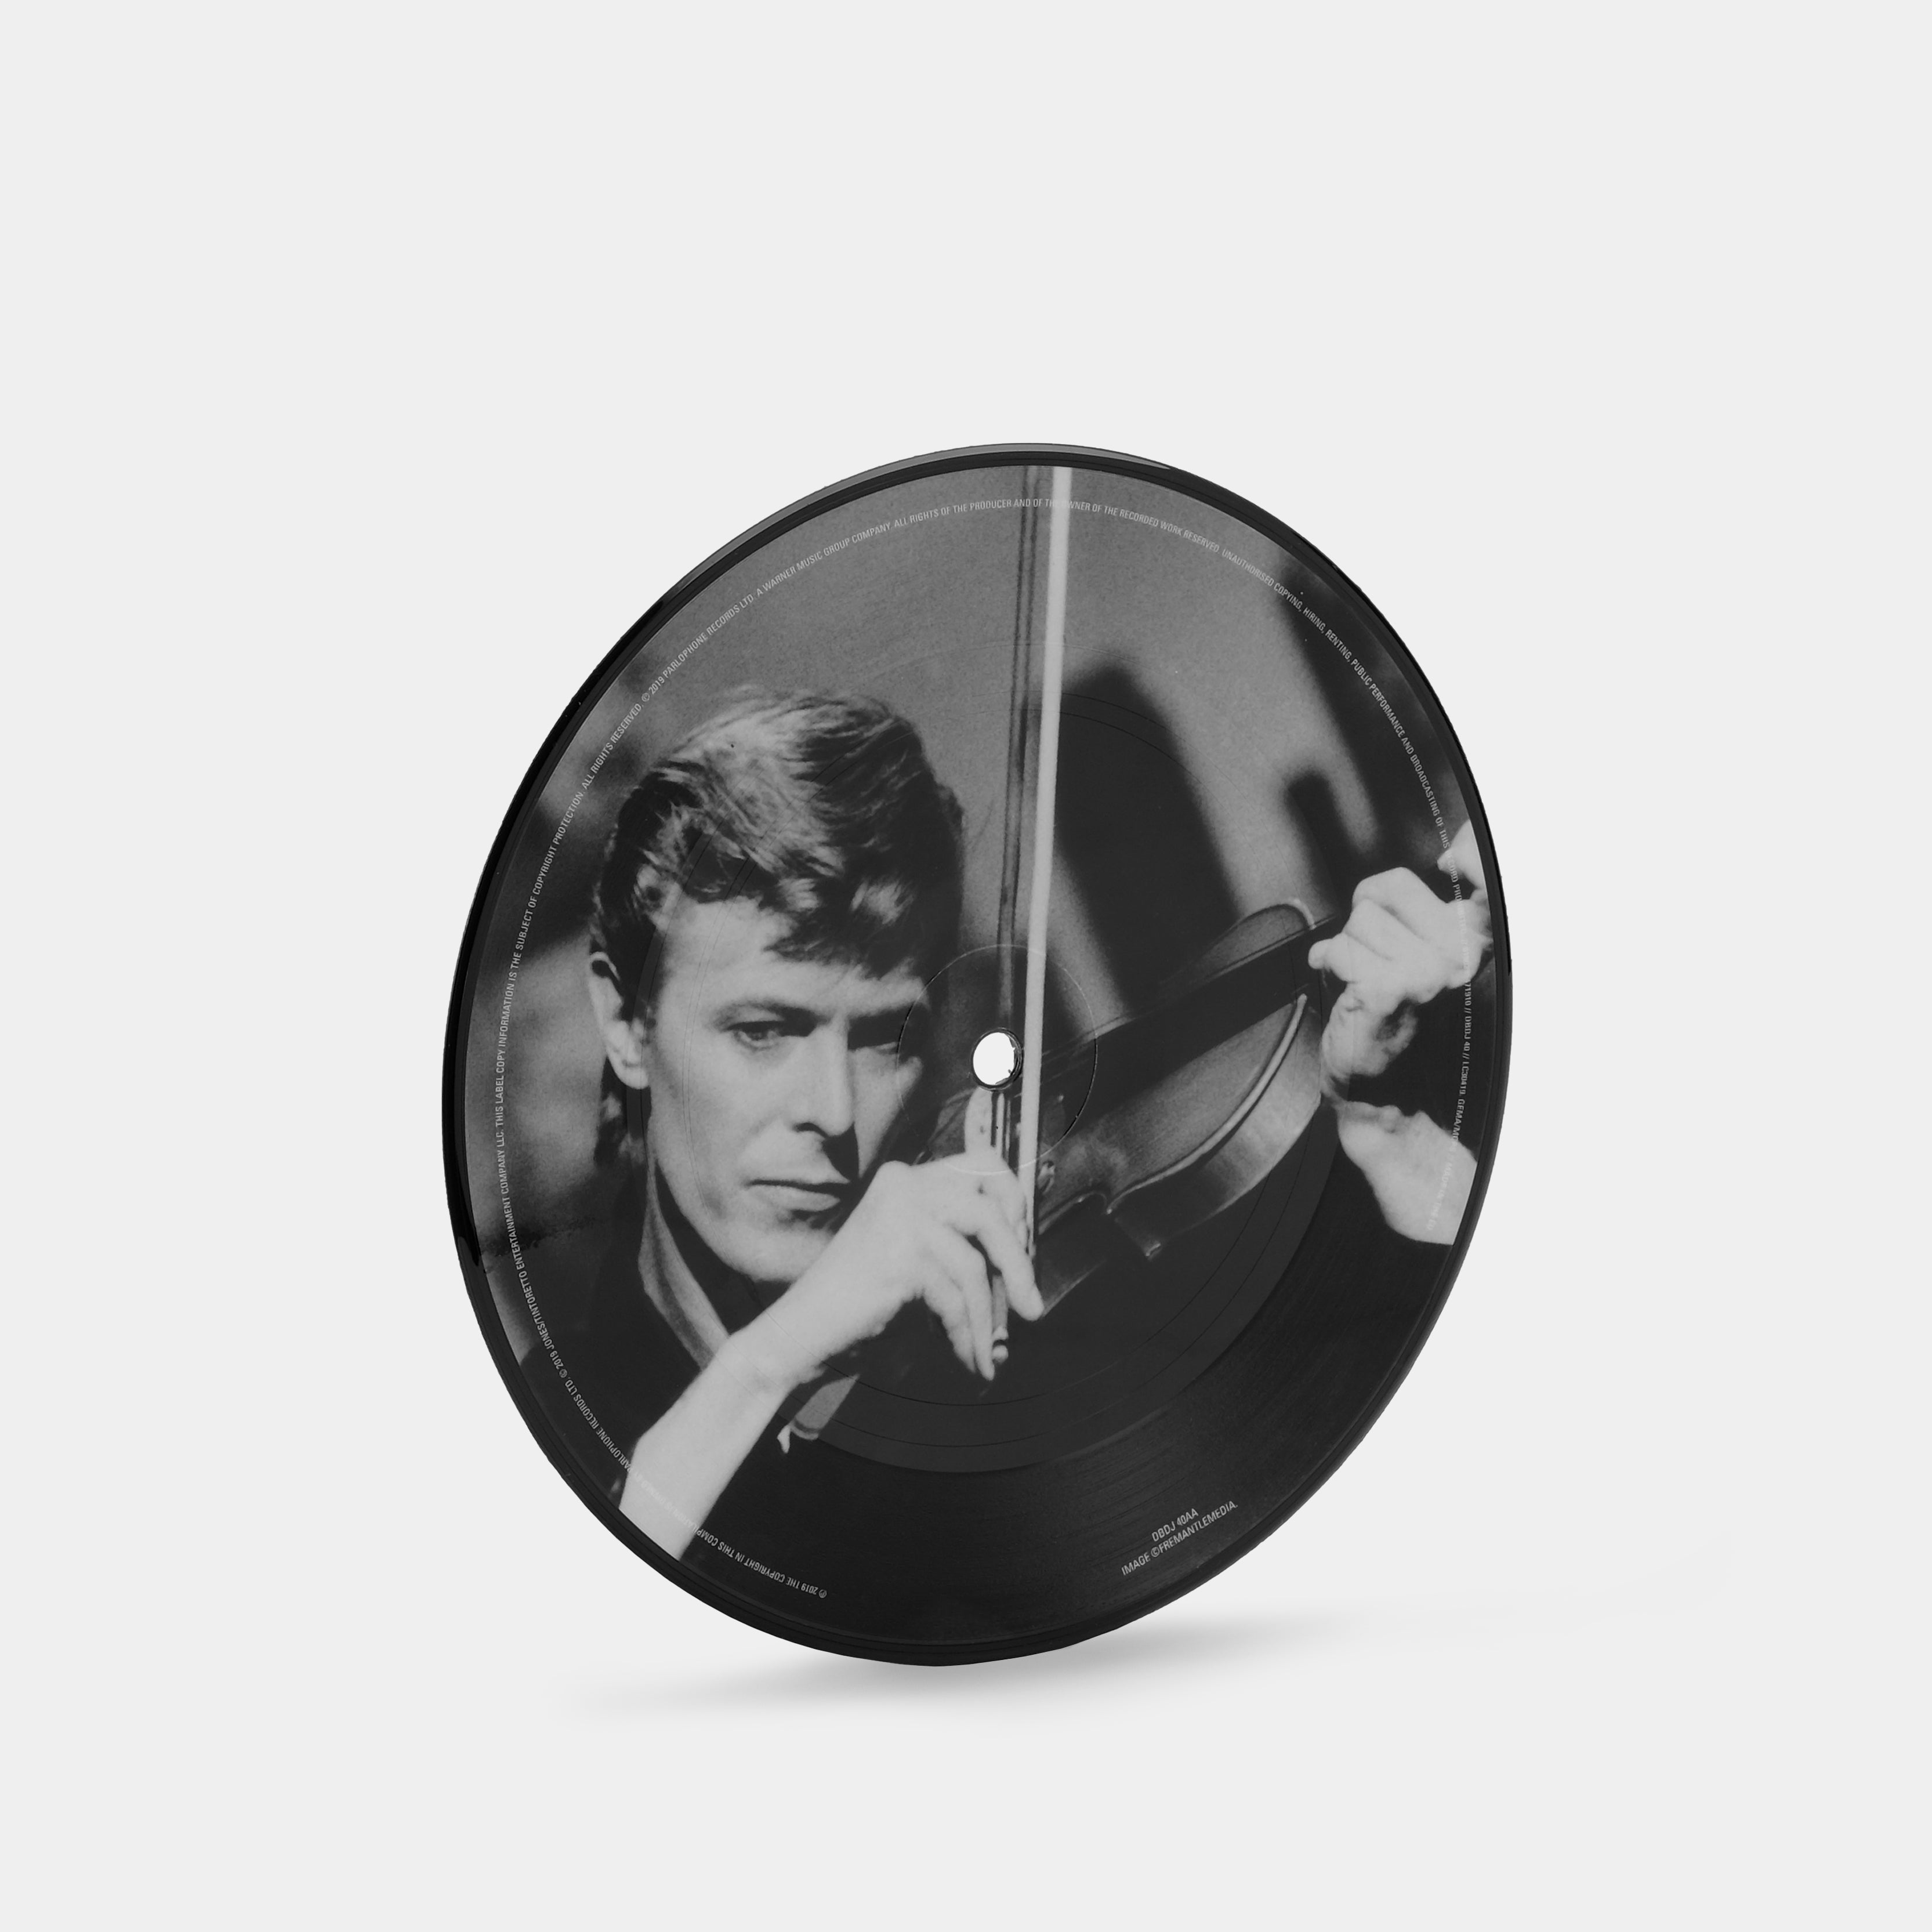 David Bowie - D.J. EP (40th Anniversary Edition) 7" Vinyl Record